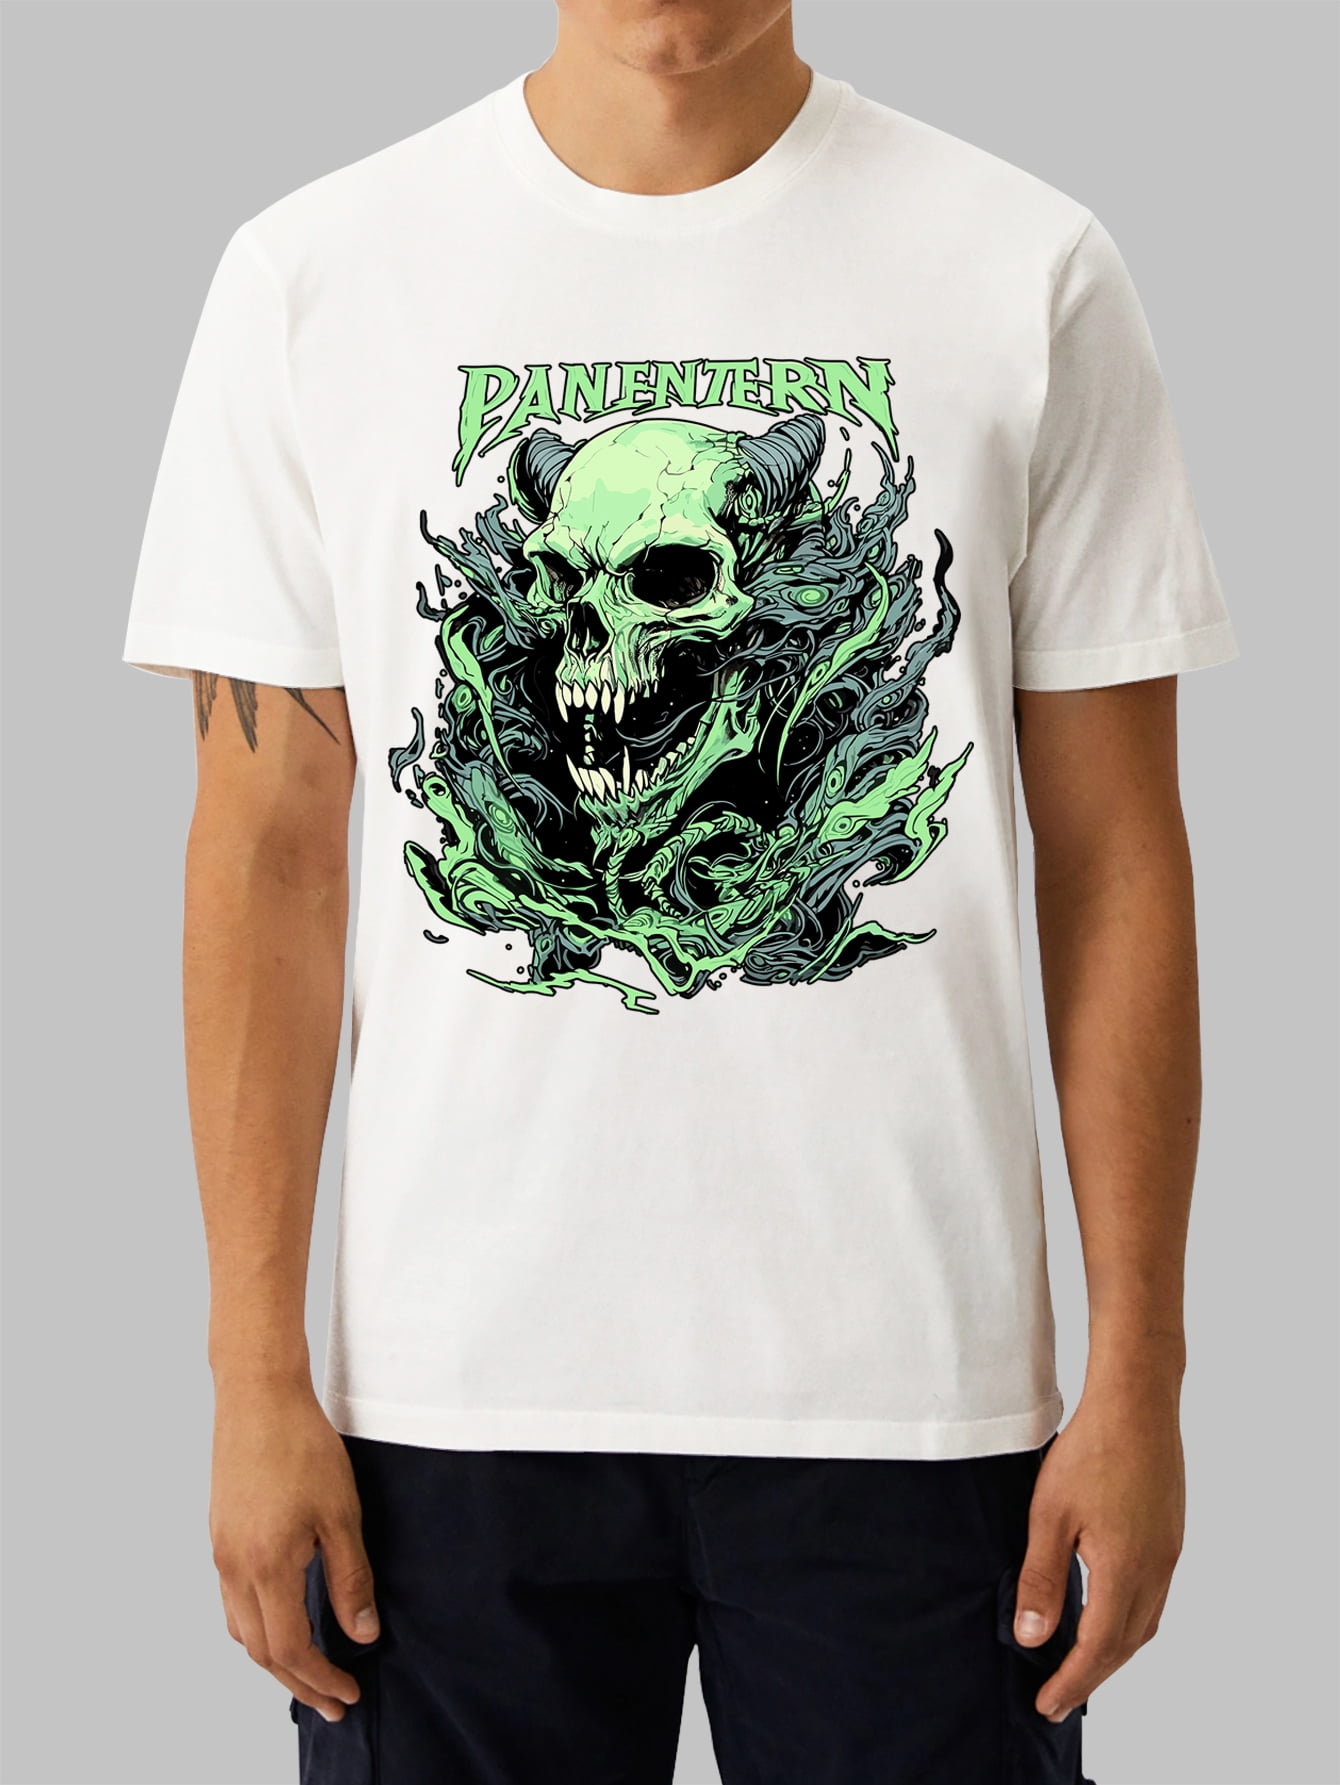 OIMCCIV Unisex Casual T-shirt Monster Skull Printing Crew Neck Graphic ...